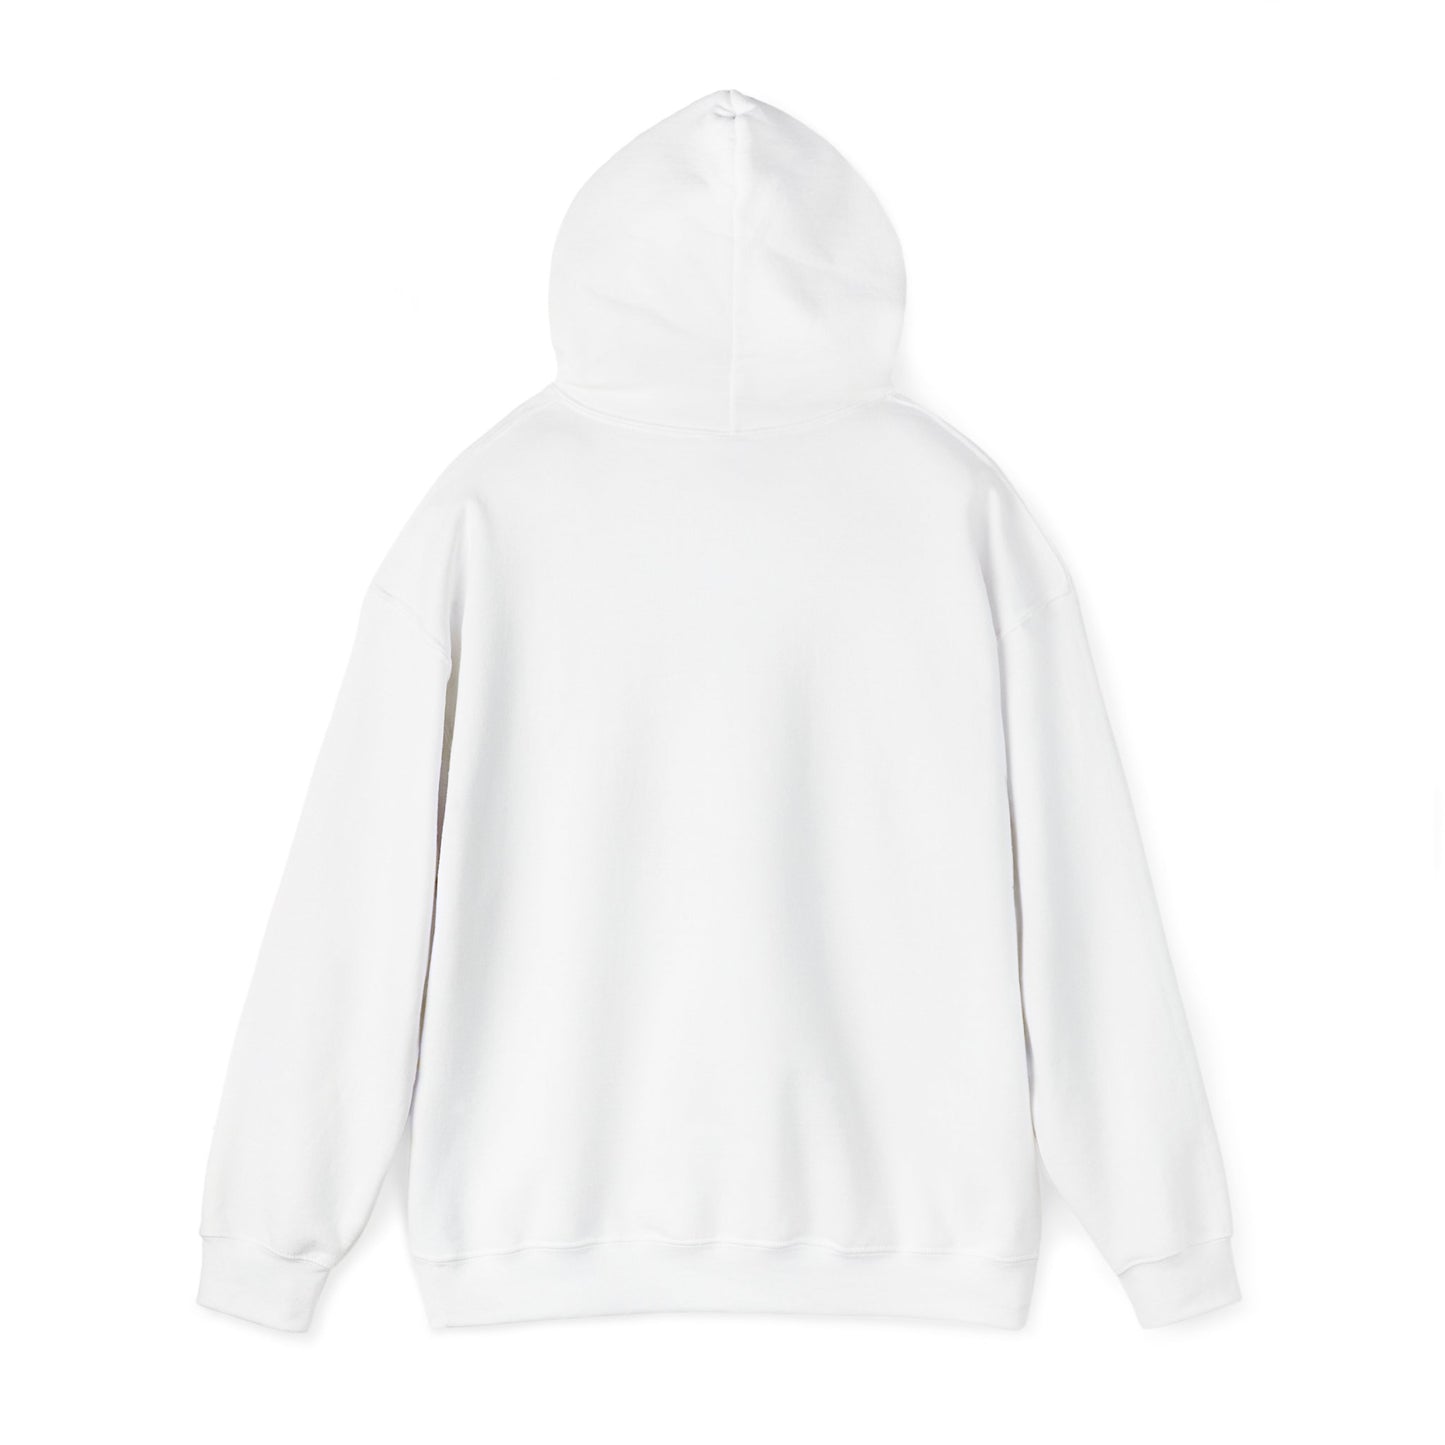 Best Son Hooded Sweatshirt, Bogan's Design